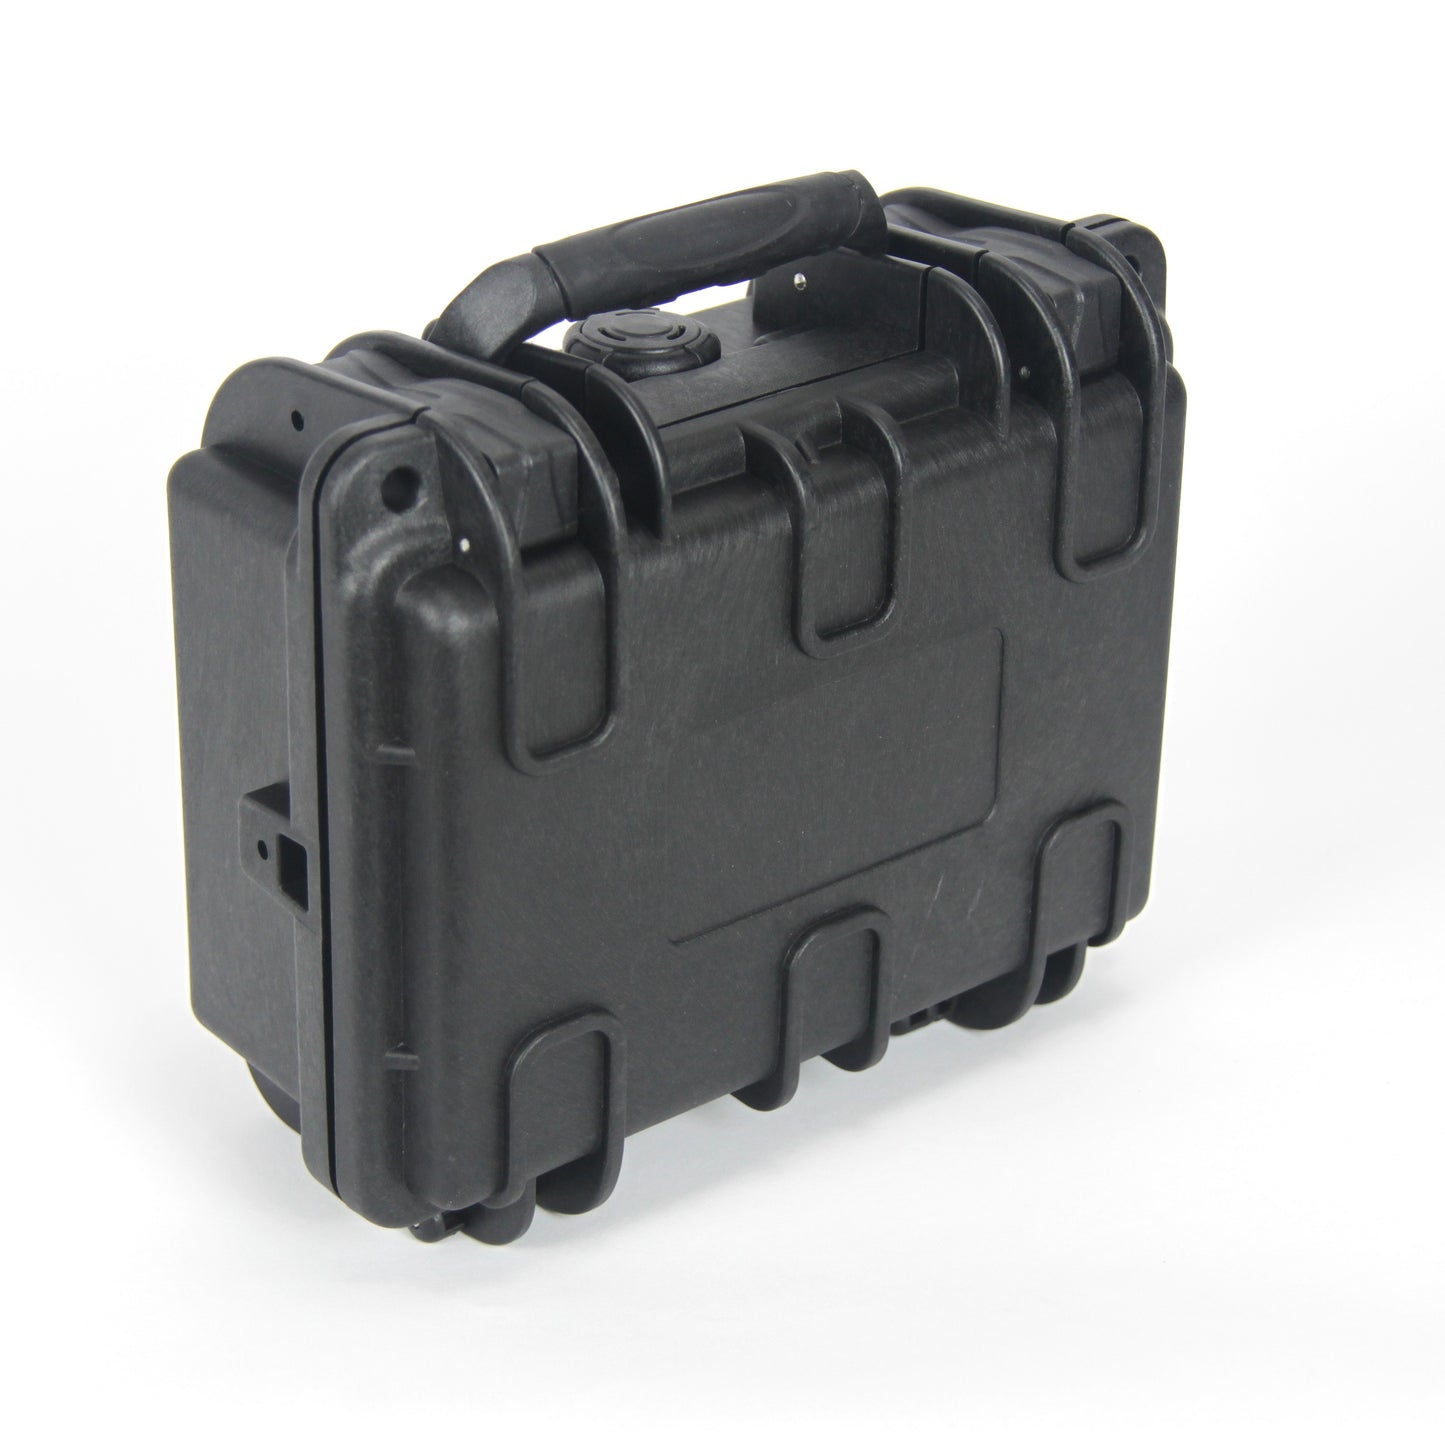 Glass Fiber Steel Framed Locking Gun Case Lock Box Waterproof Storage Carry Case